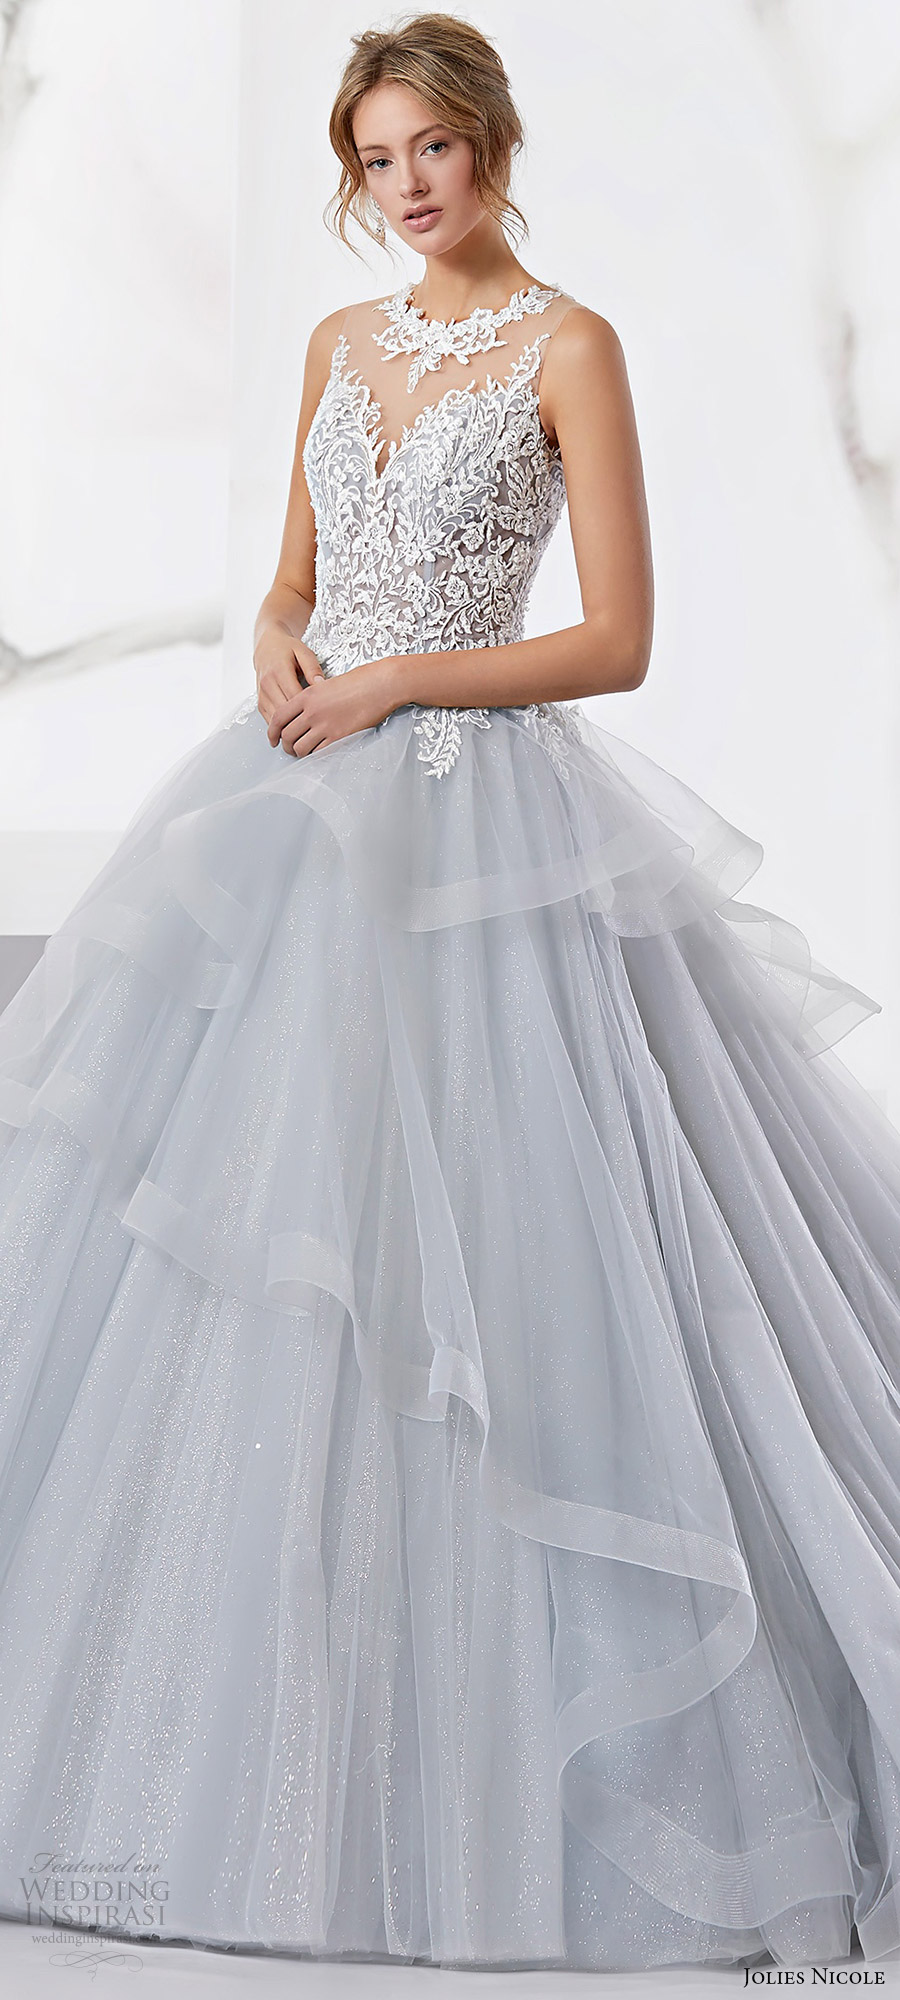 jolies nicole 2018 bridal trends sleeveless jewel neck beaded lace bodice layered skirt ball gown wedding dress (JOAB18526) mv light blue